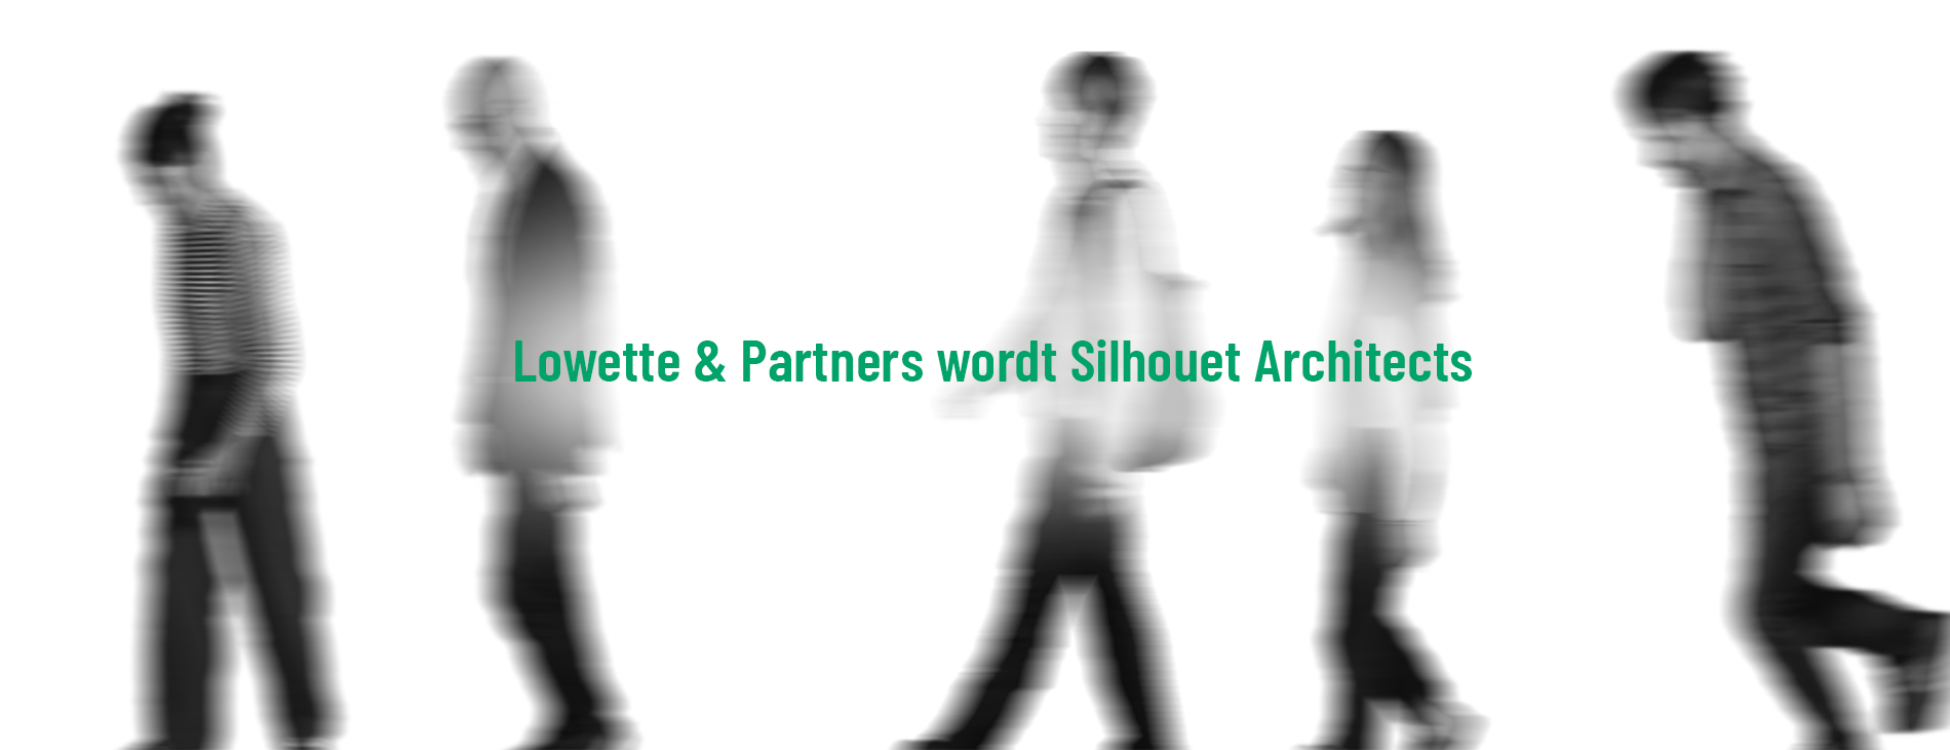 Lowette & Partners wordt Silhouet architects